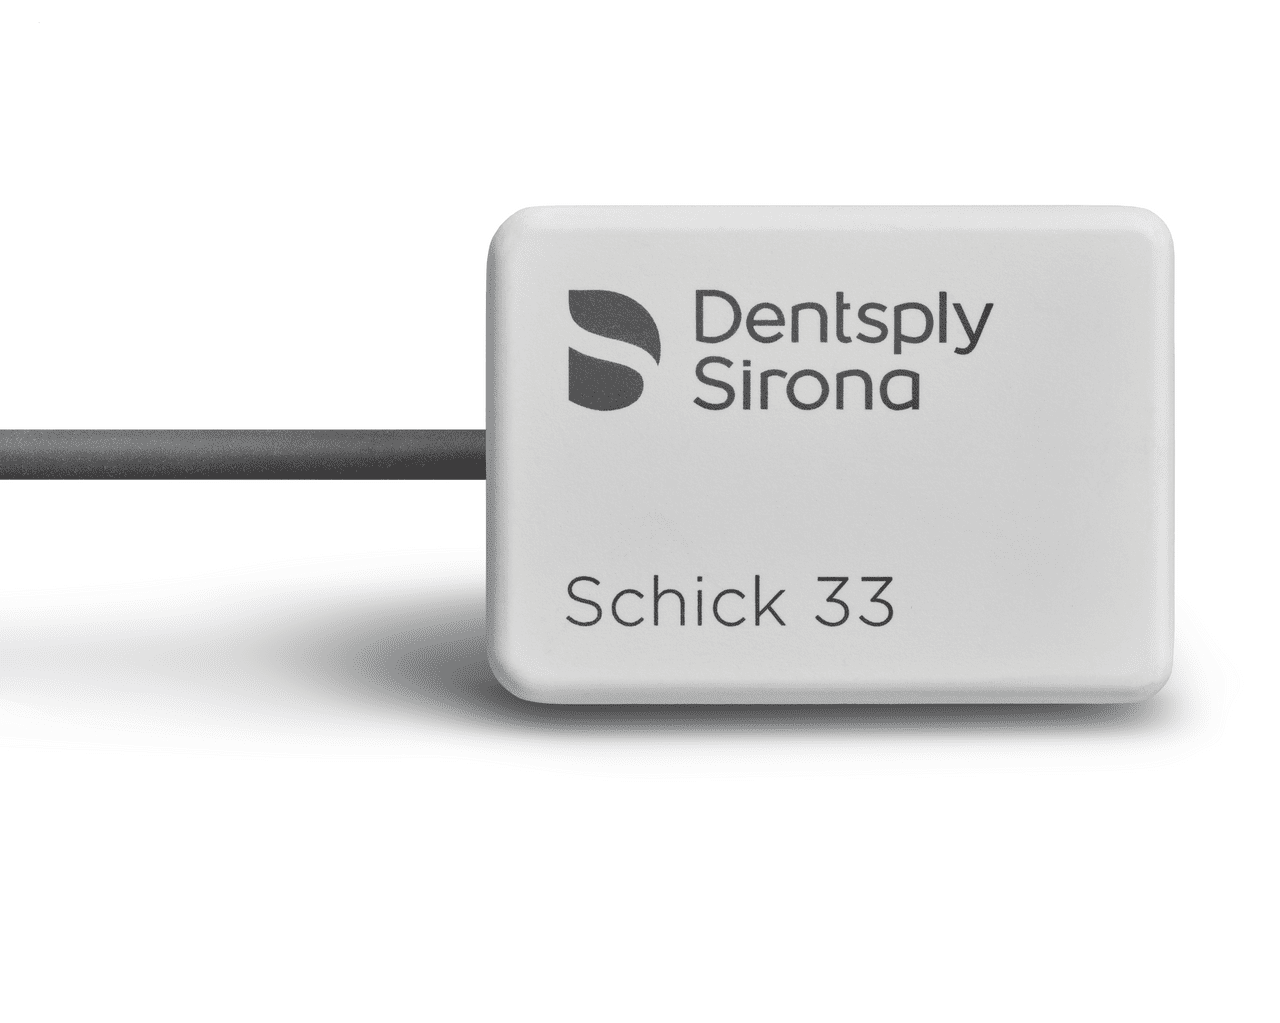 Schick 33 intraoral X-ray sensor